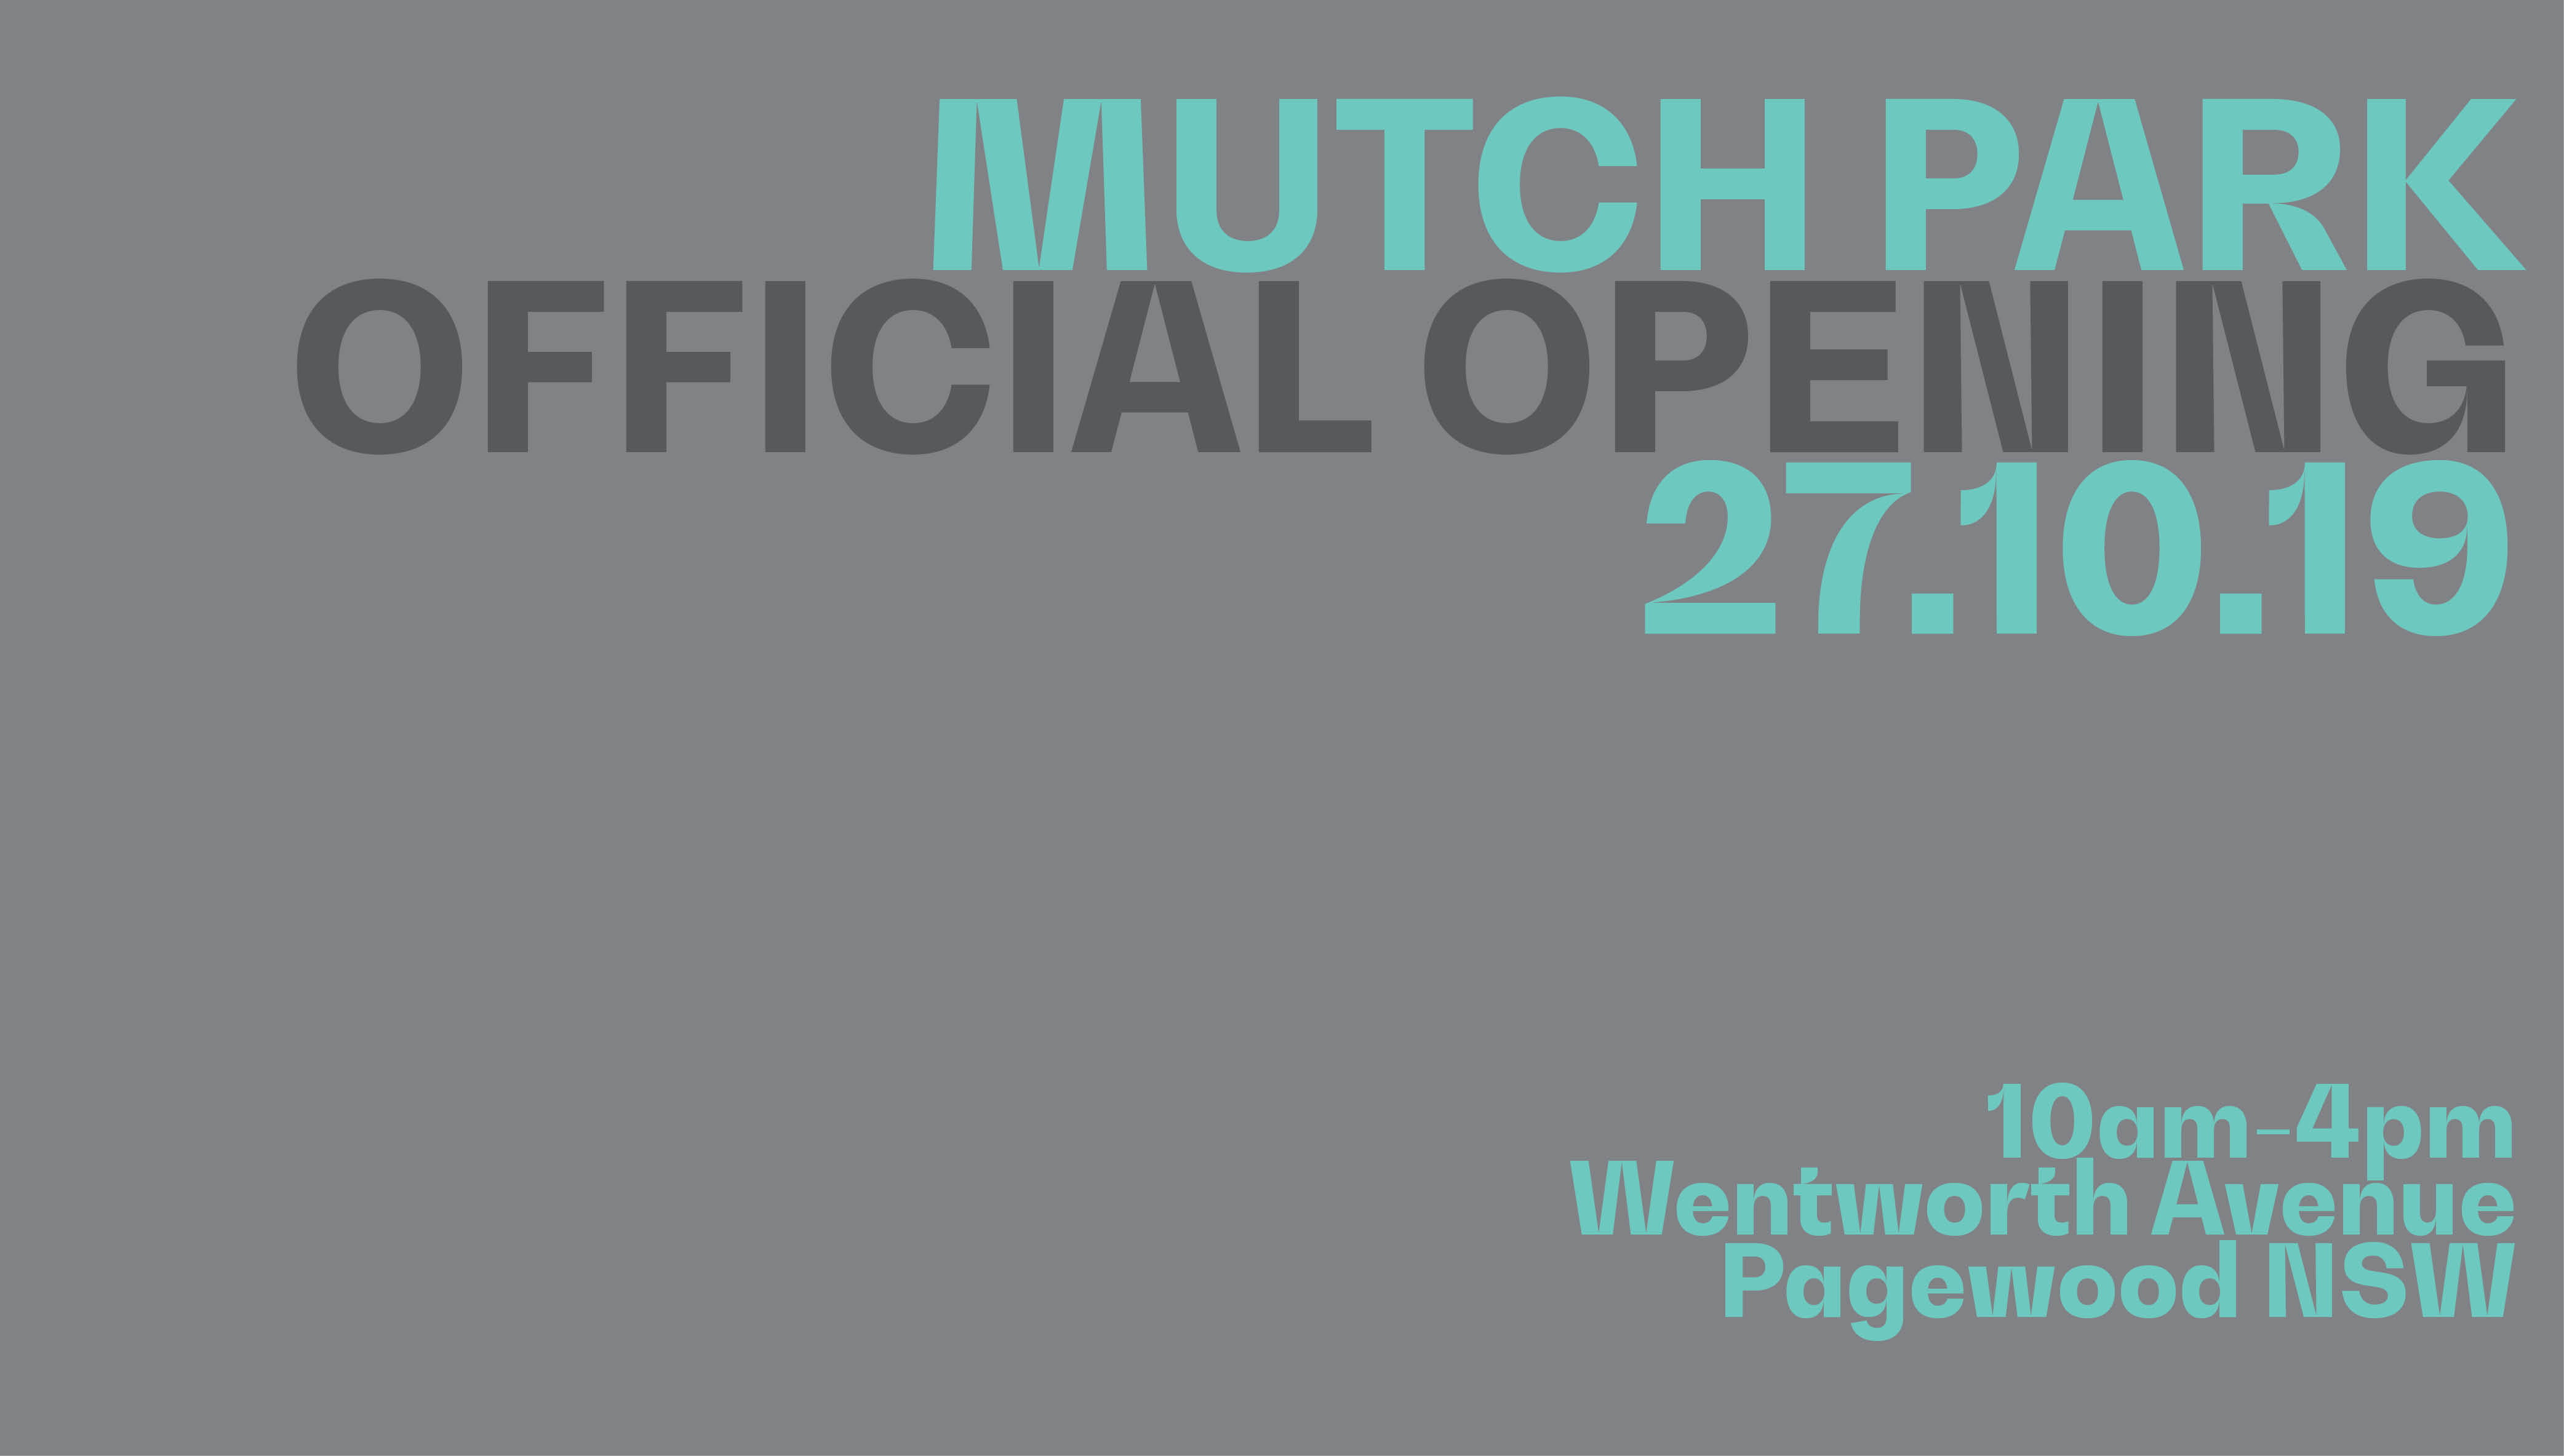 Mutch Park Opening